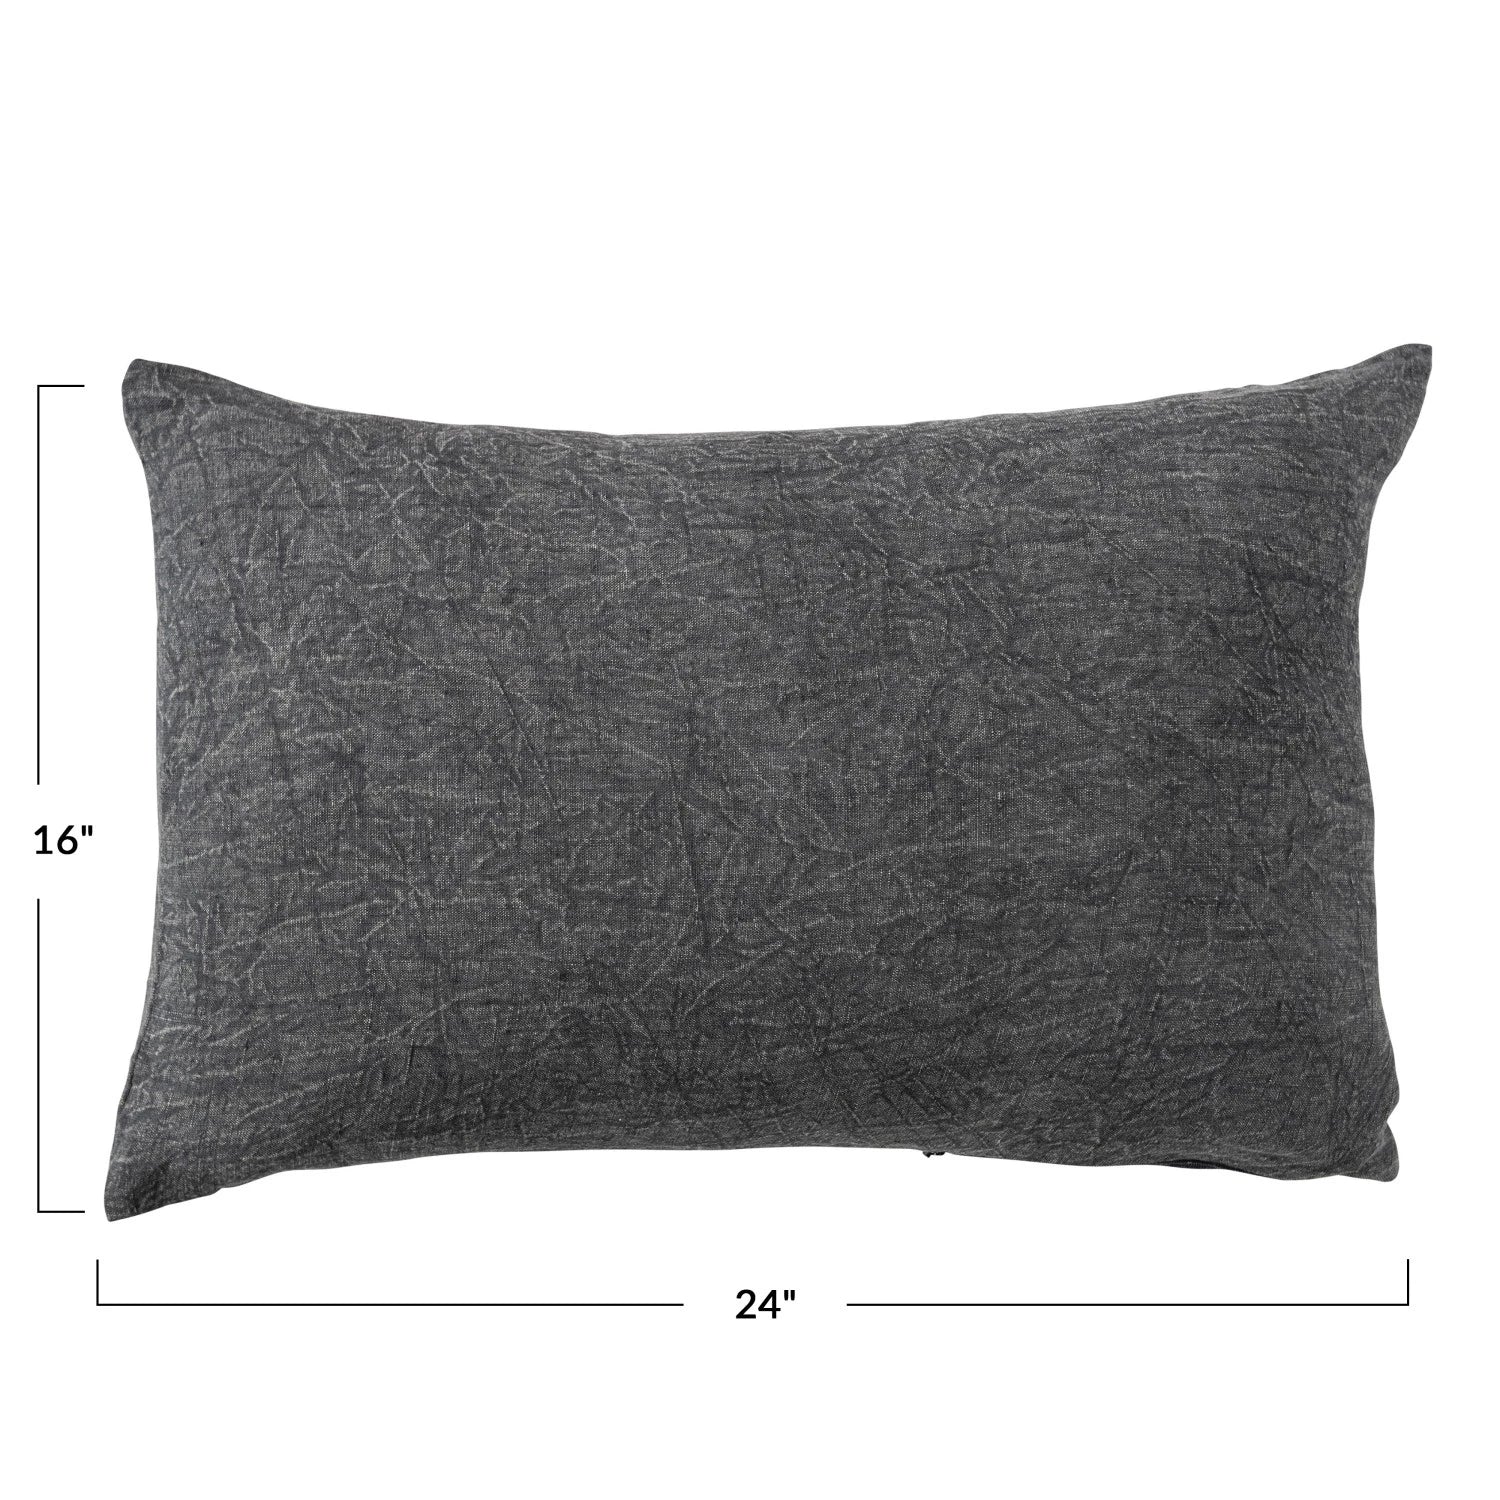 Charcoal Stonewashed Linen Lumbar Pillow